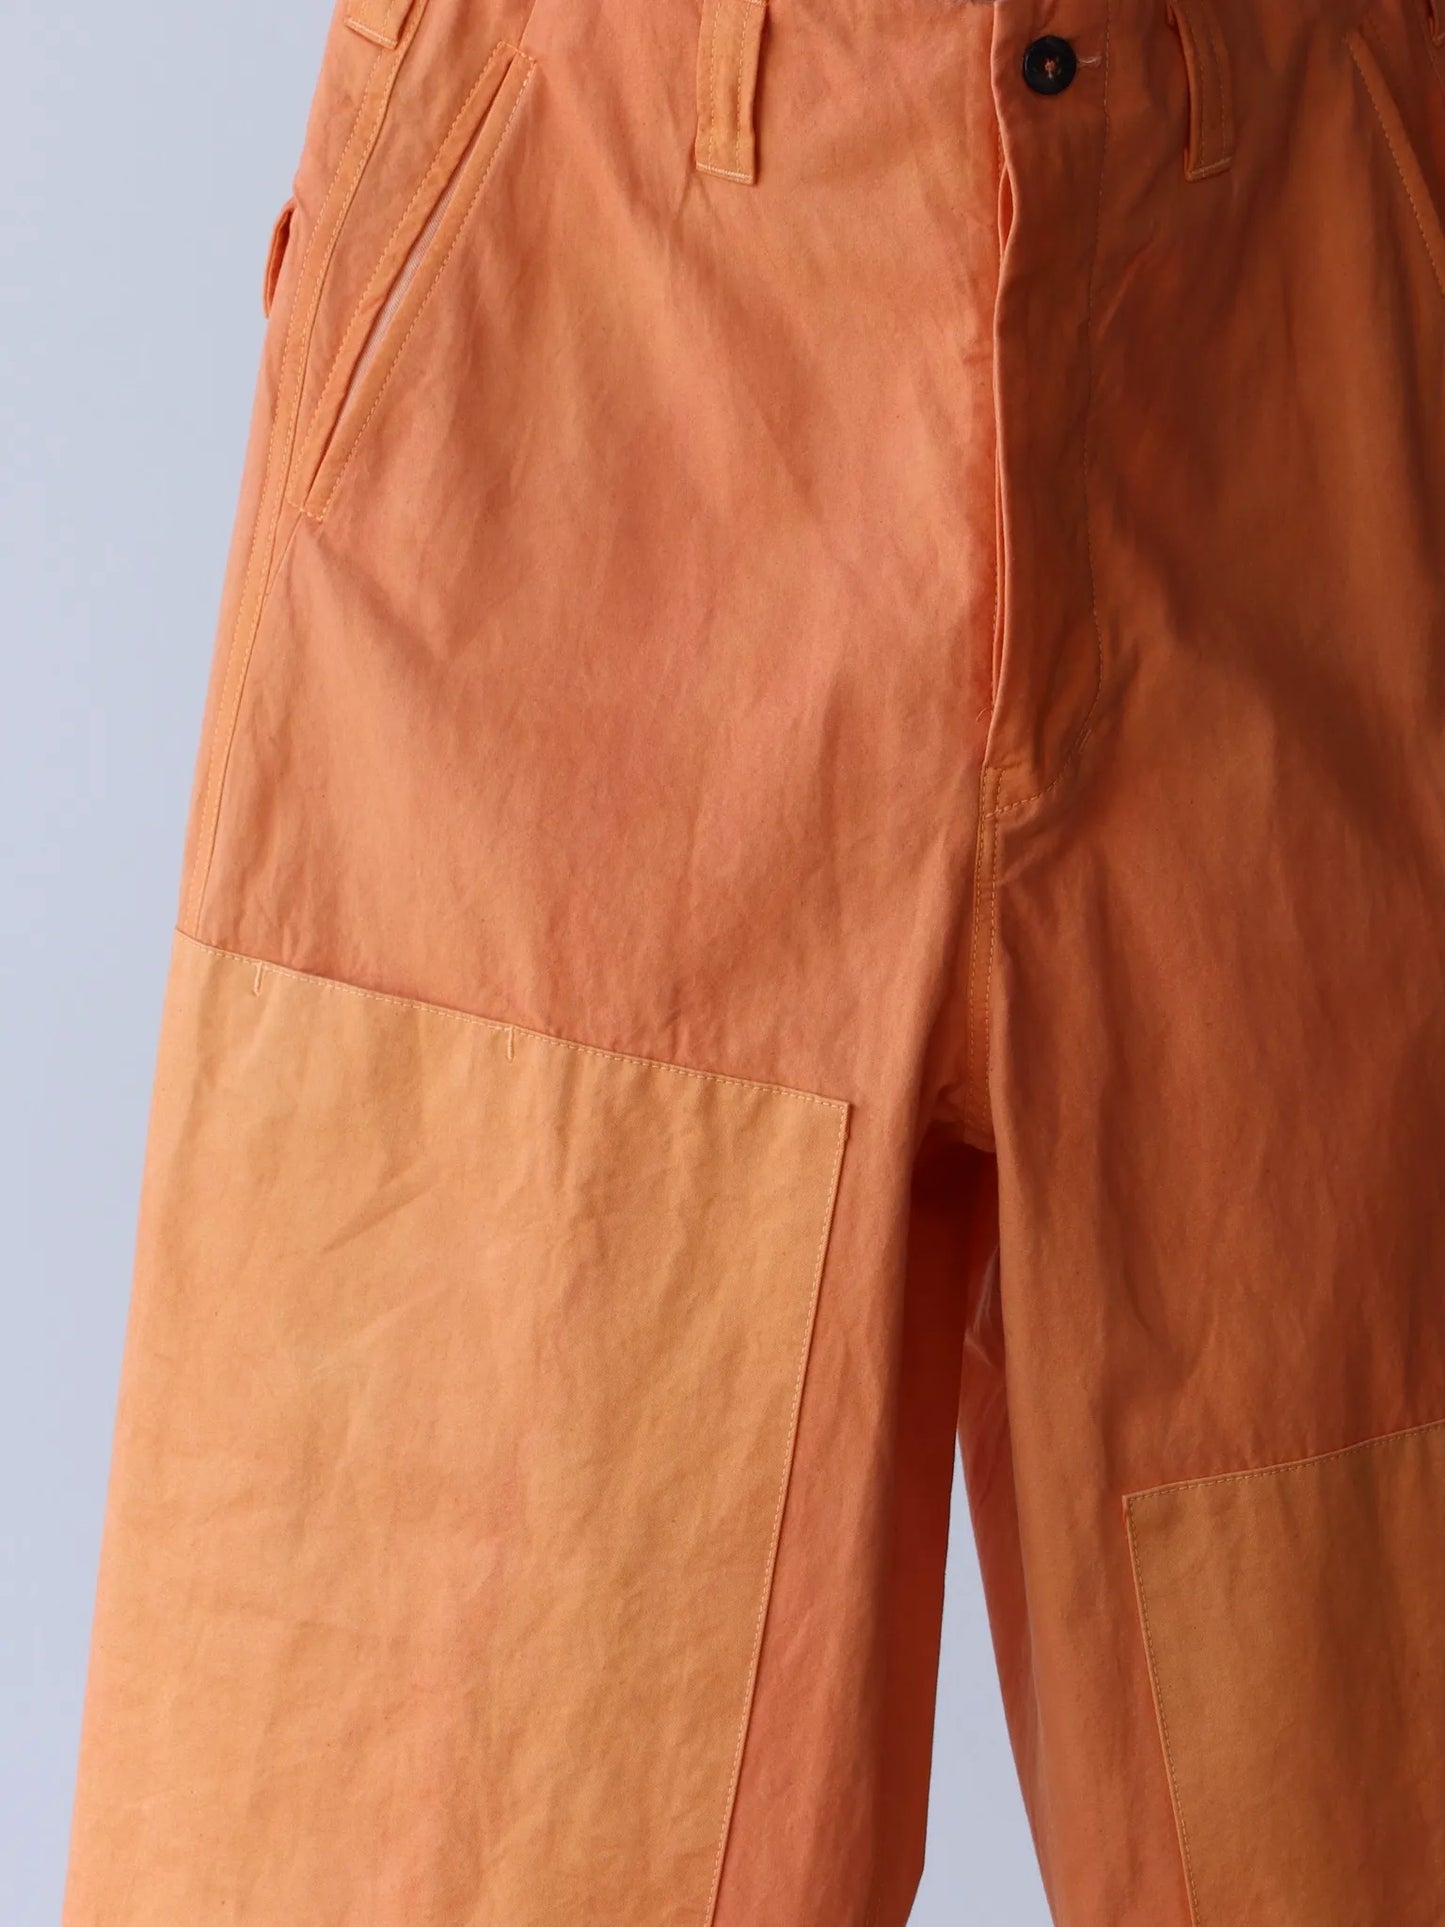 amachi-double-knee-cergo-pants-light-weight-orange-4